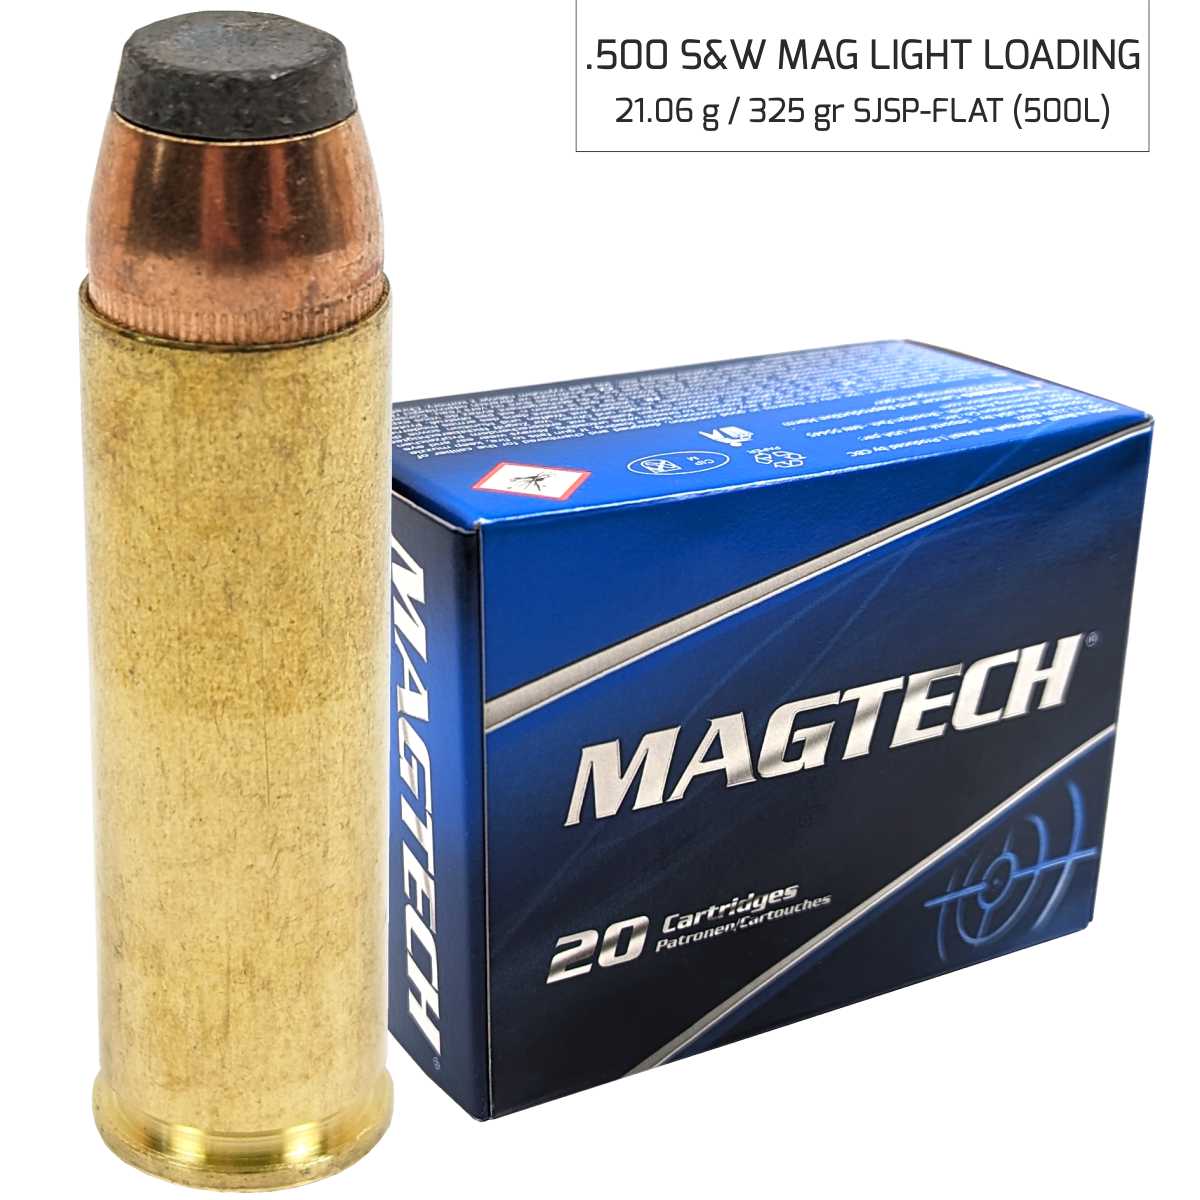 Náboj Magtech 500 S&W FMJ FLAT (500D) 21,06 g, 325 grs